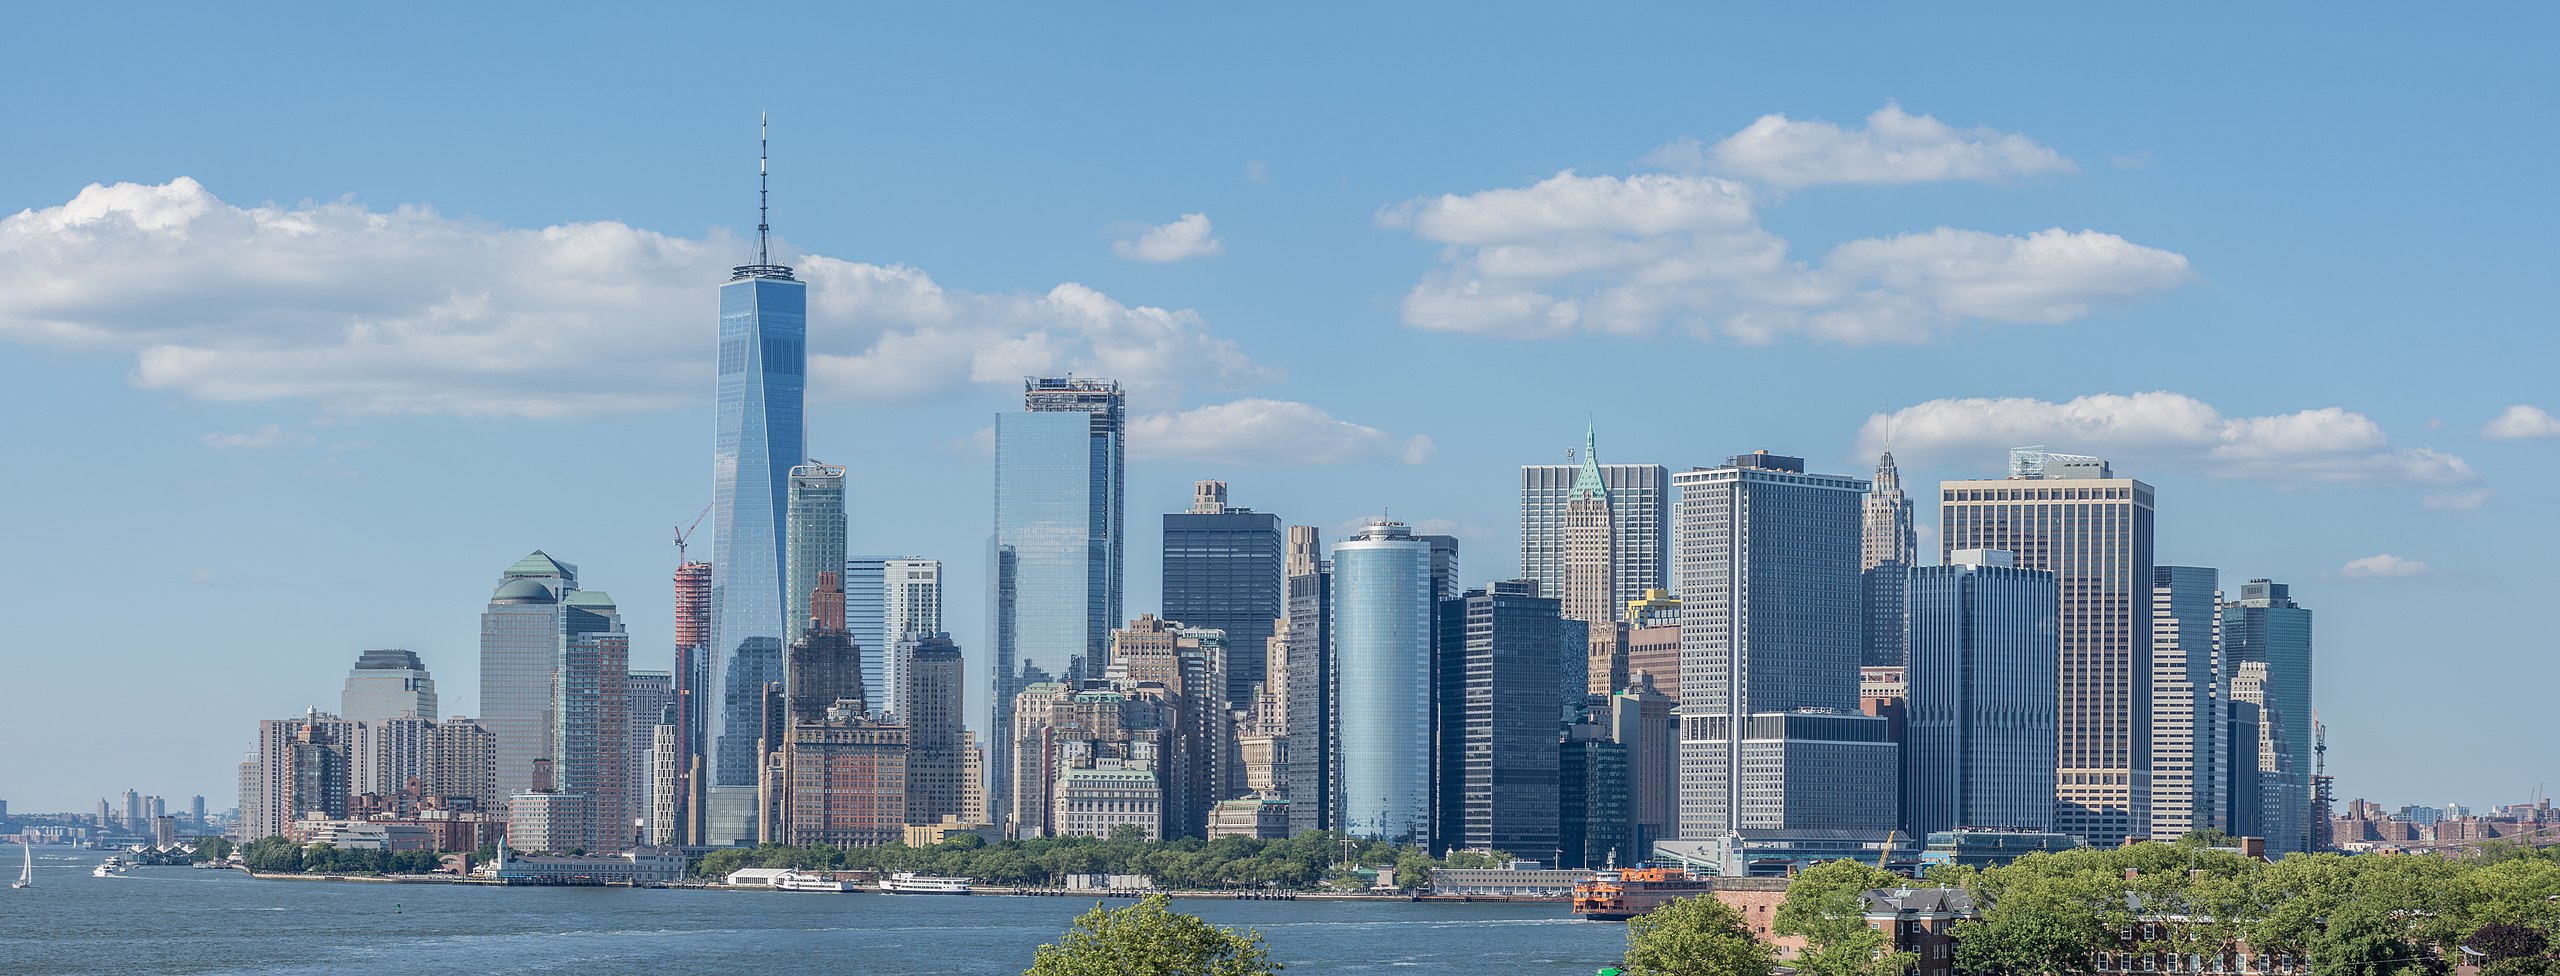 Lower Manhattan skyline - Photo:MusikAnimal